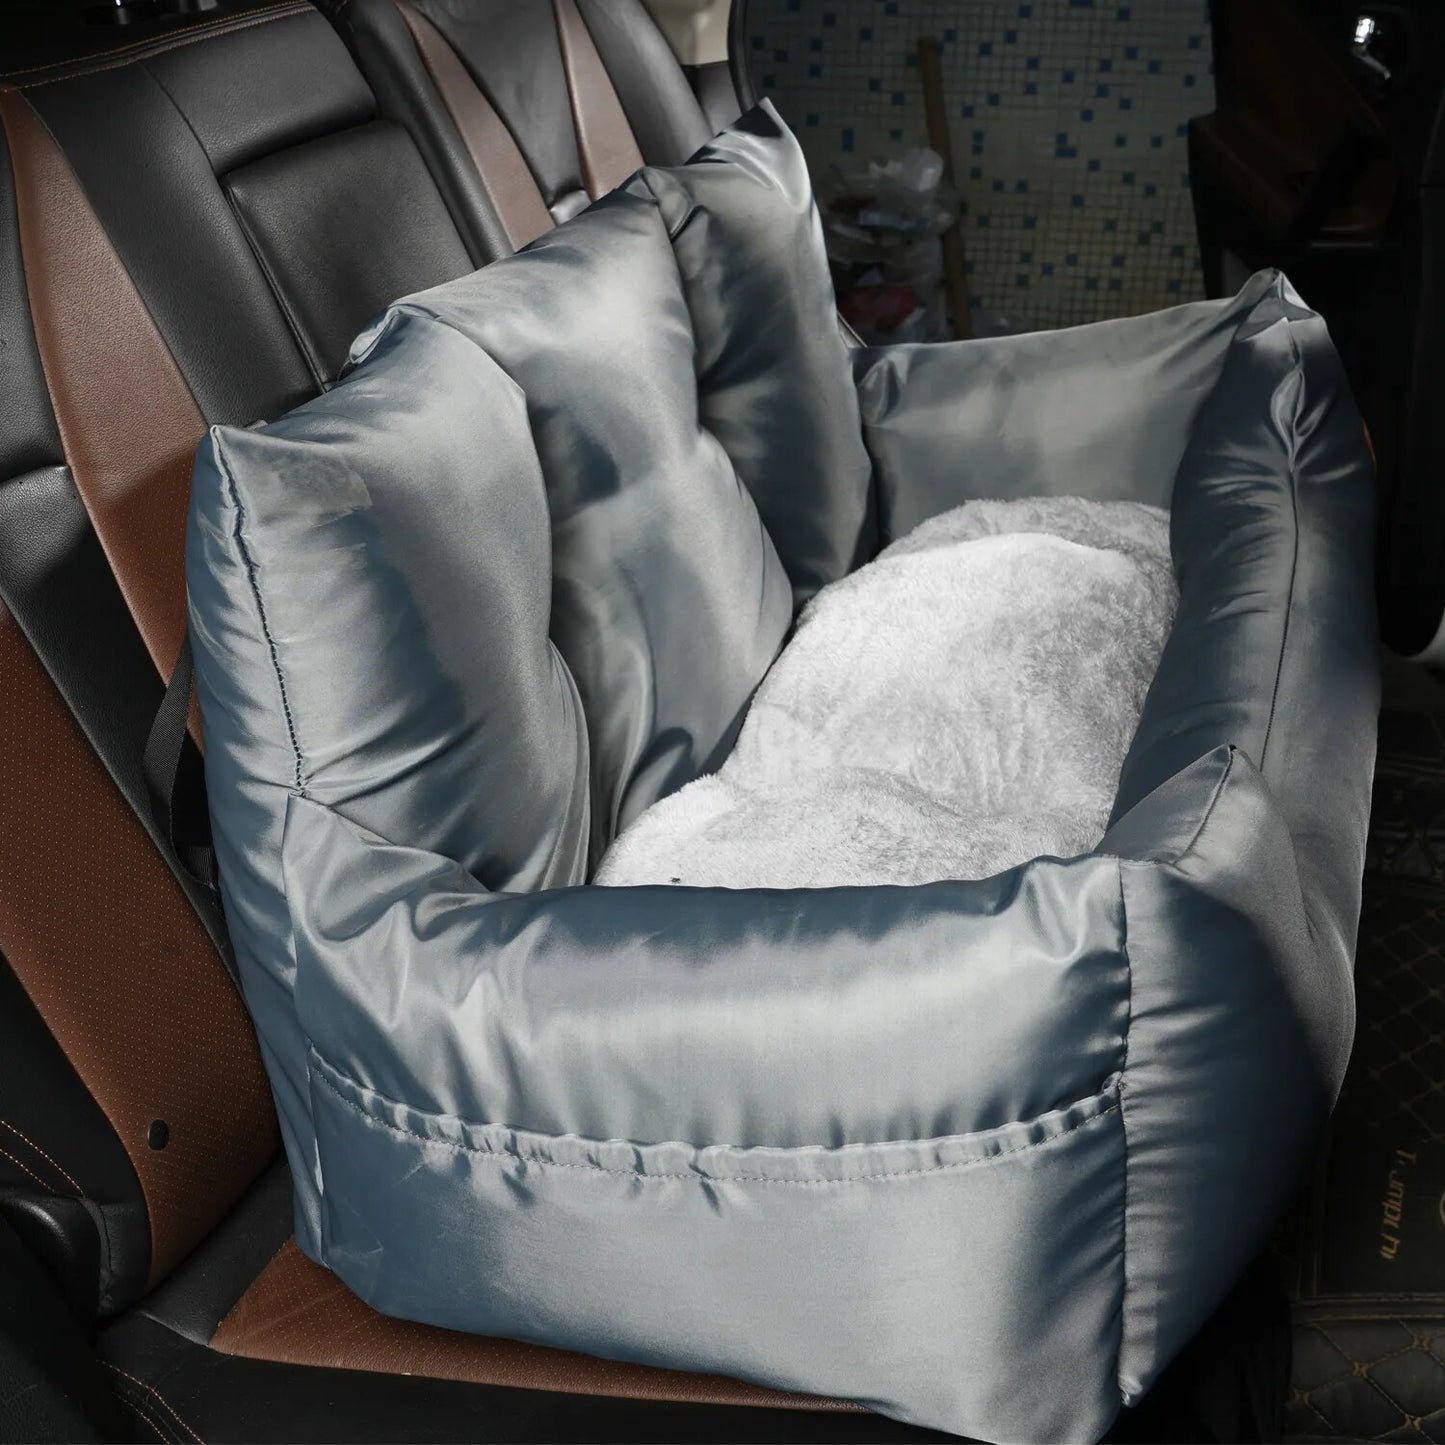 Folding Hammock  Dog Car Seat Cover